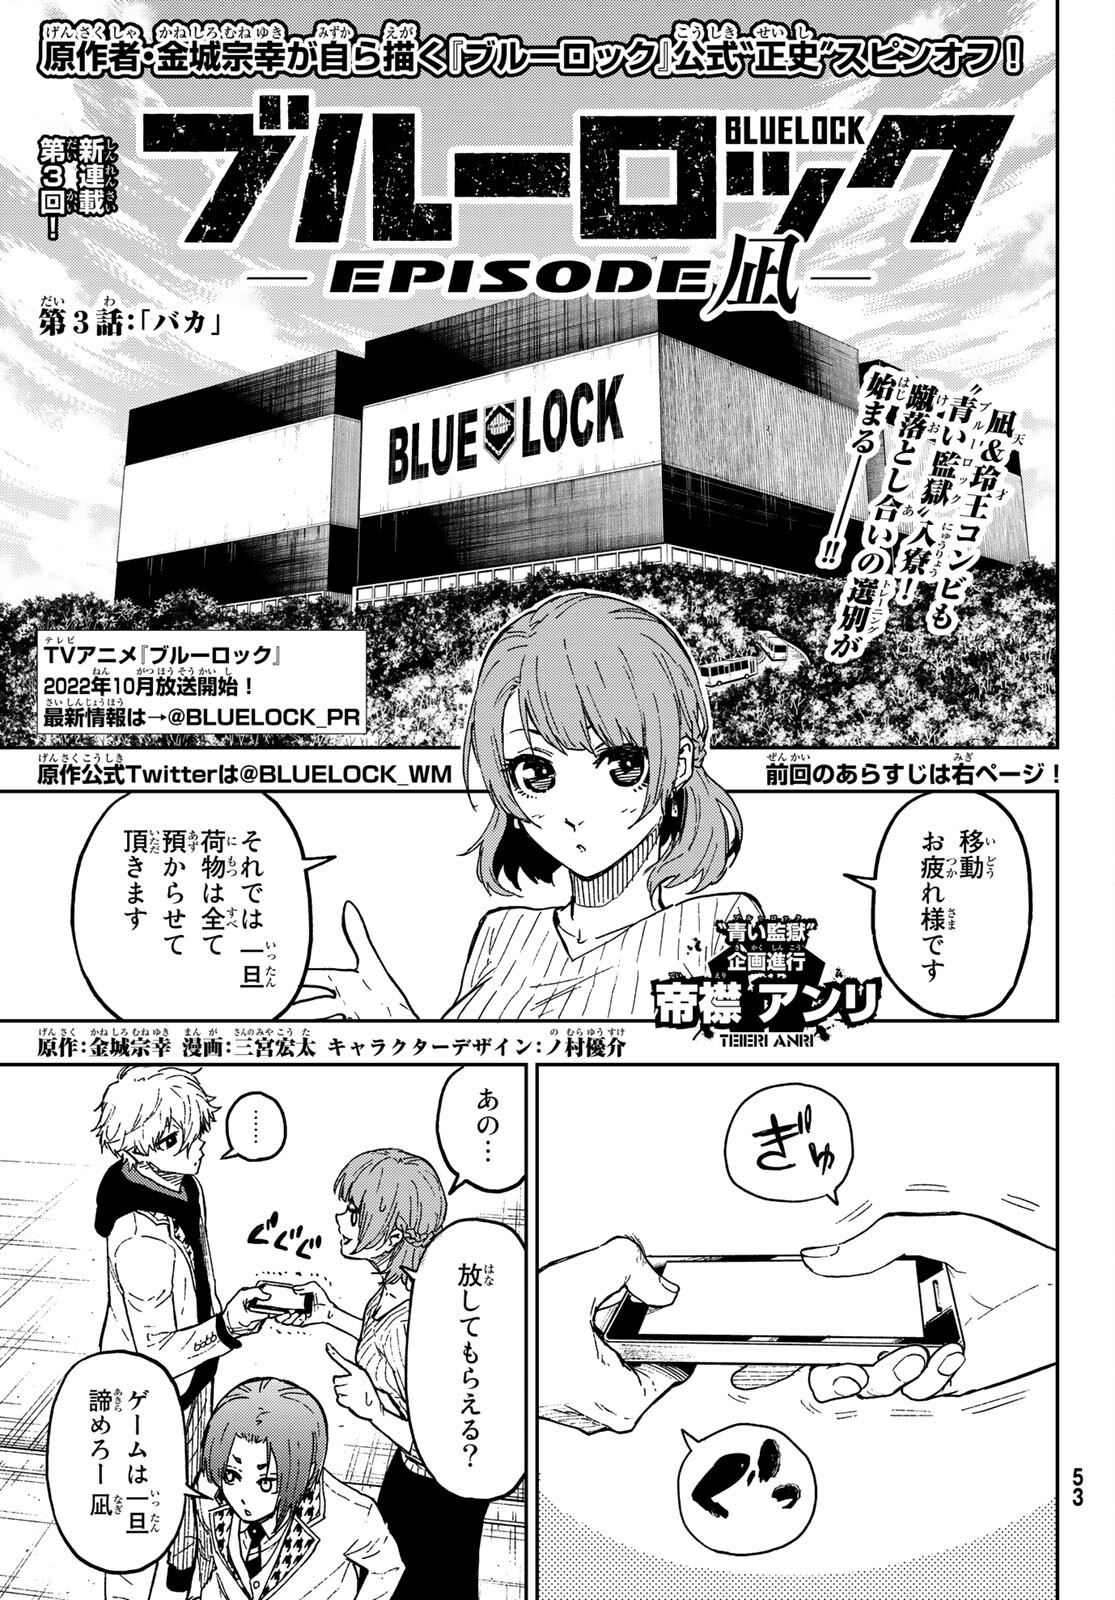 Blue Lock: Episode Nagi Archives - Bounding Into Comics